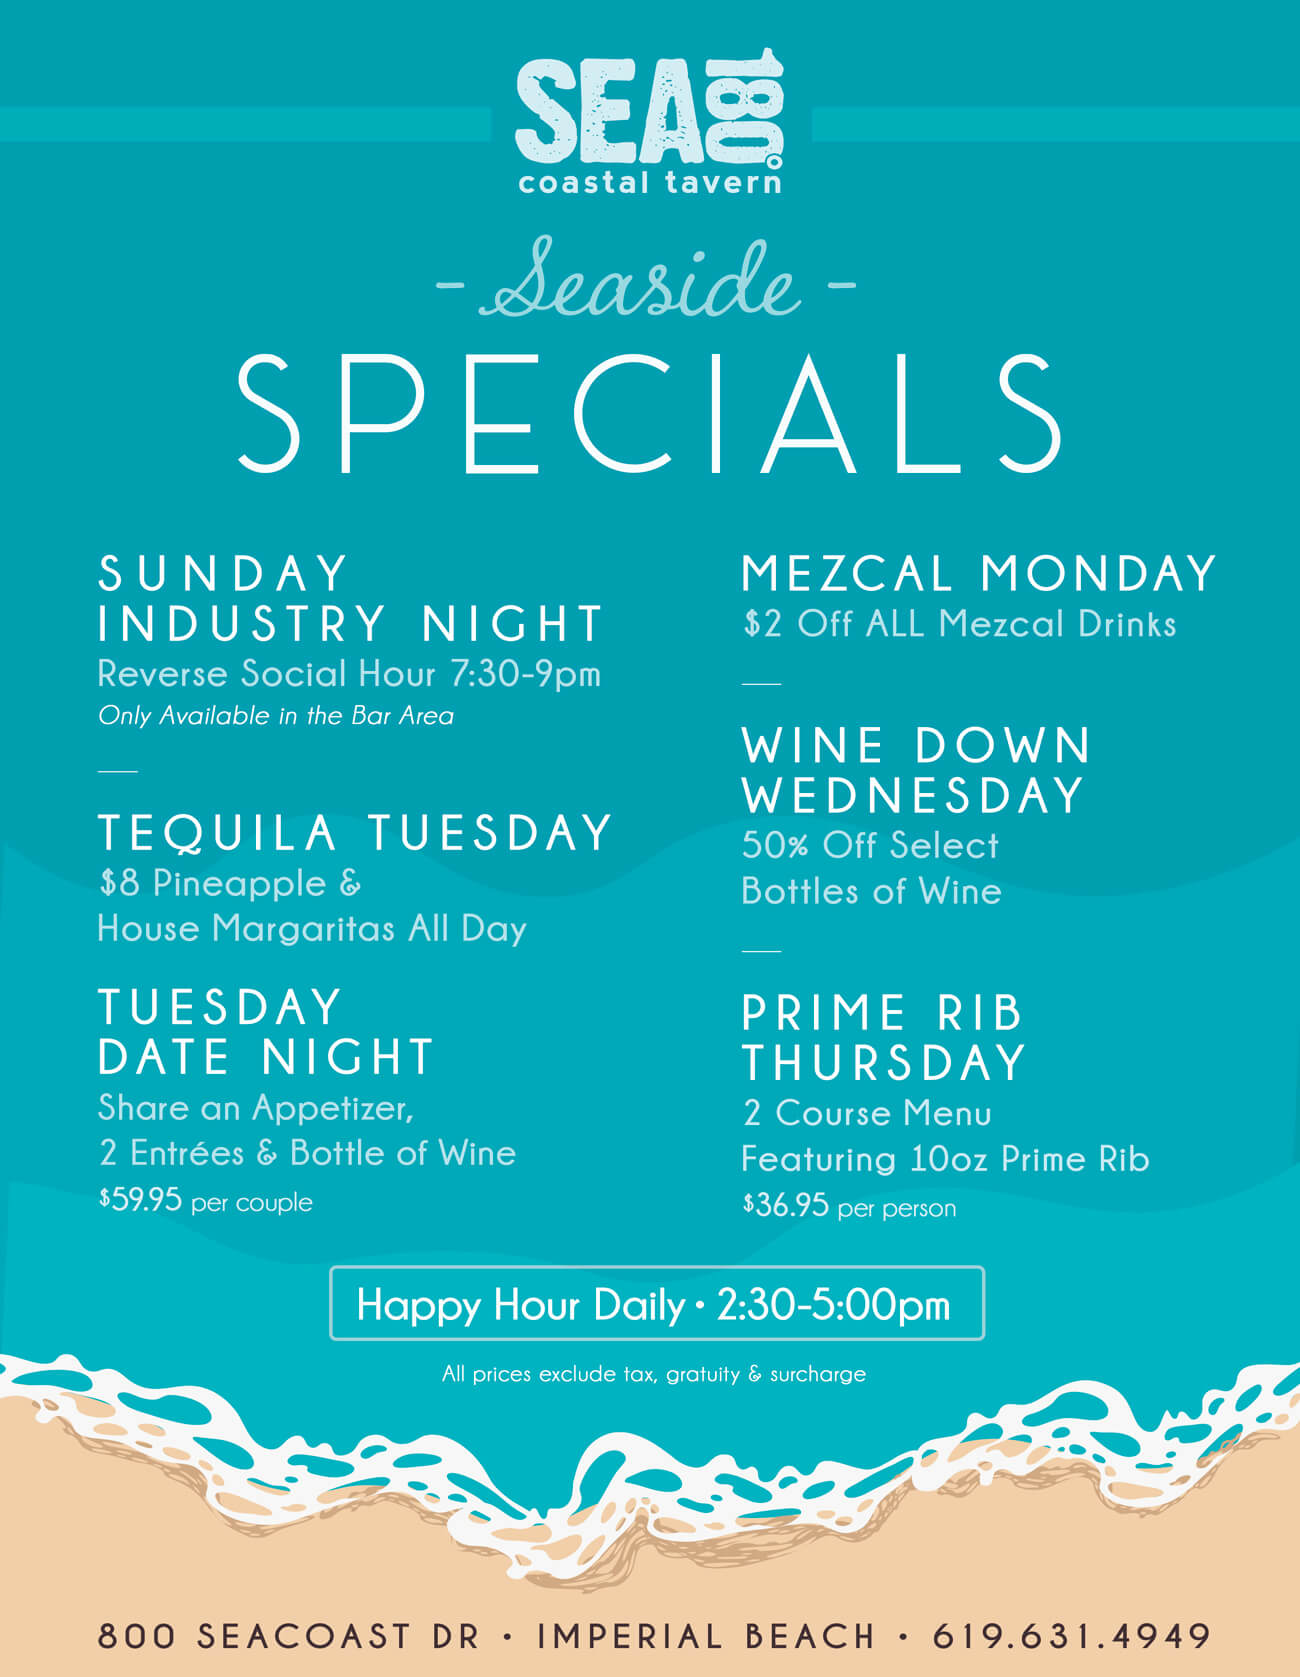 SEA180°'s Weekday Seaside Specials - SEA180 Coastal Tavern